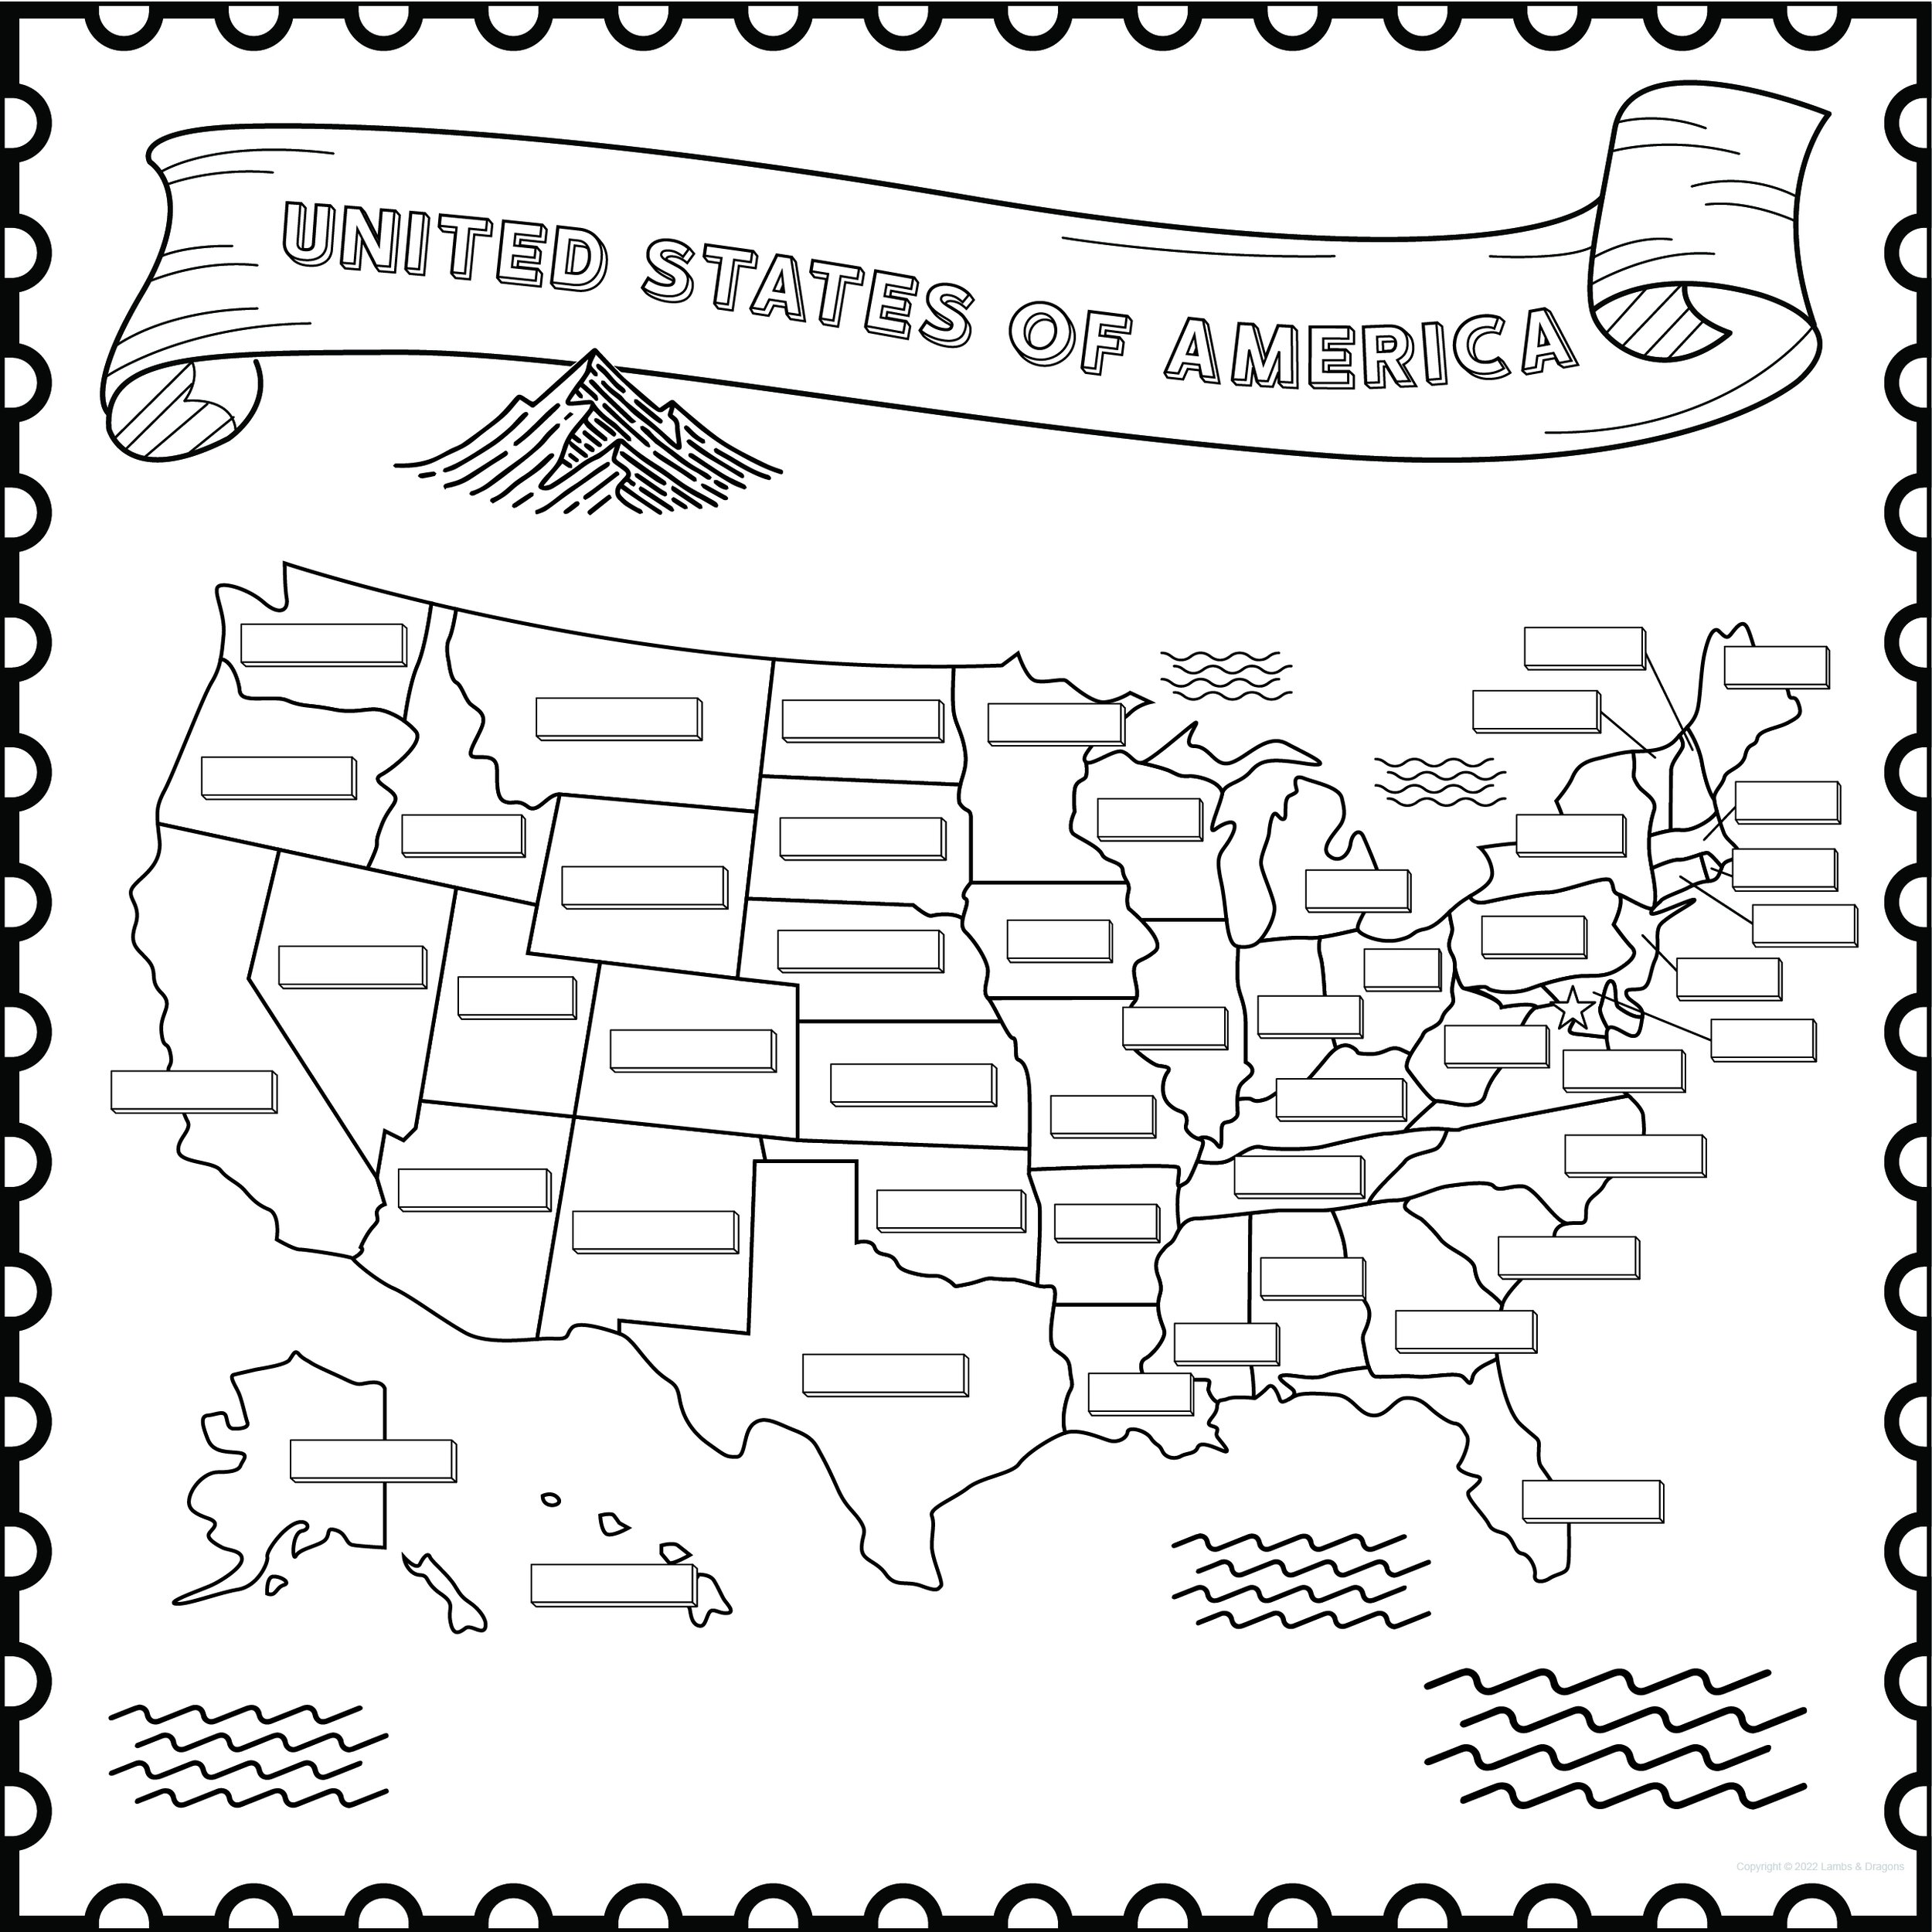 United States of America-Classroom-thumbnail.jpg